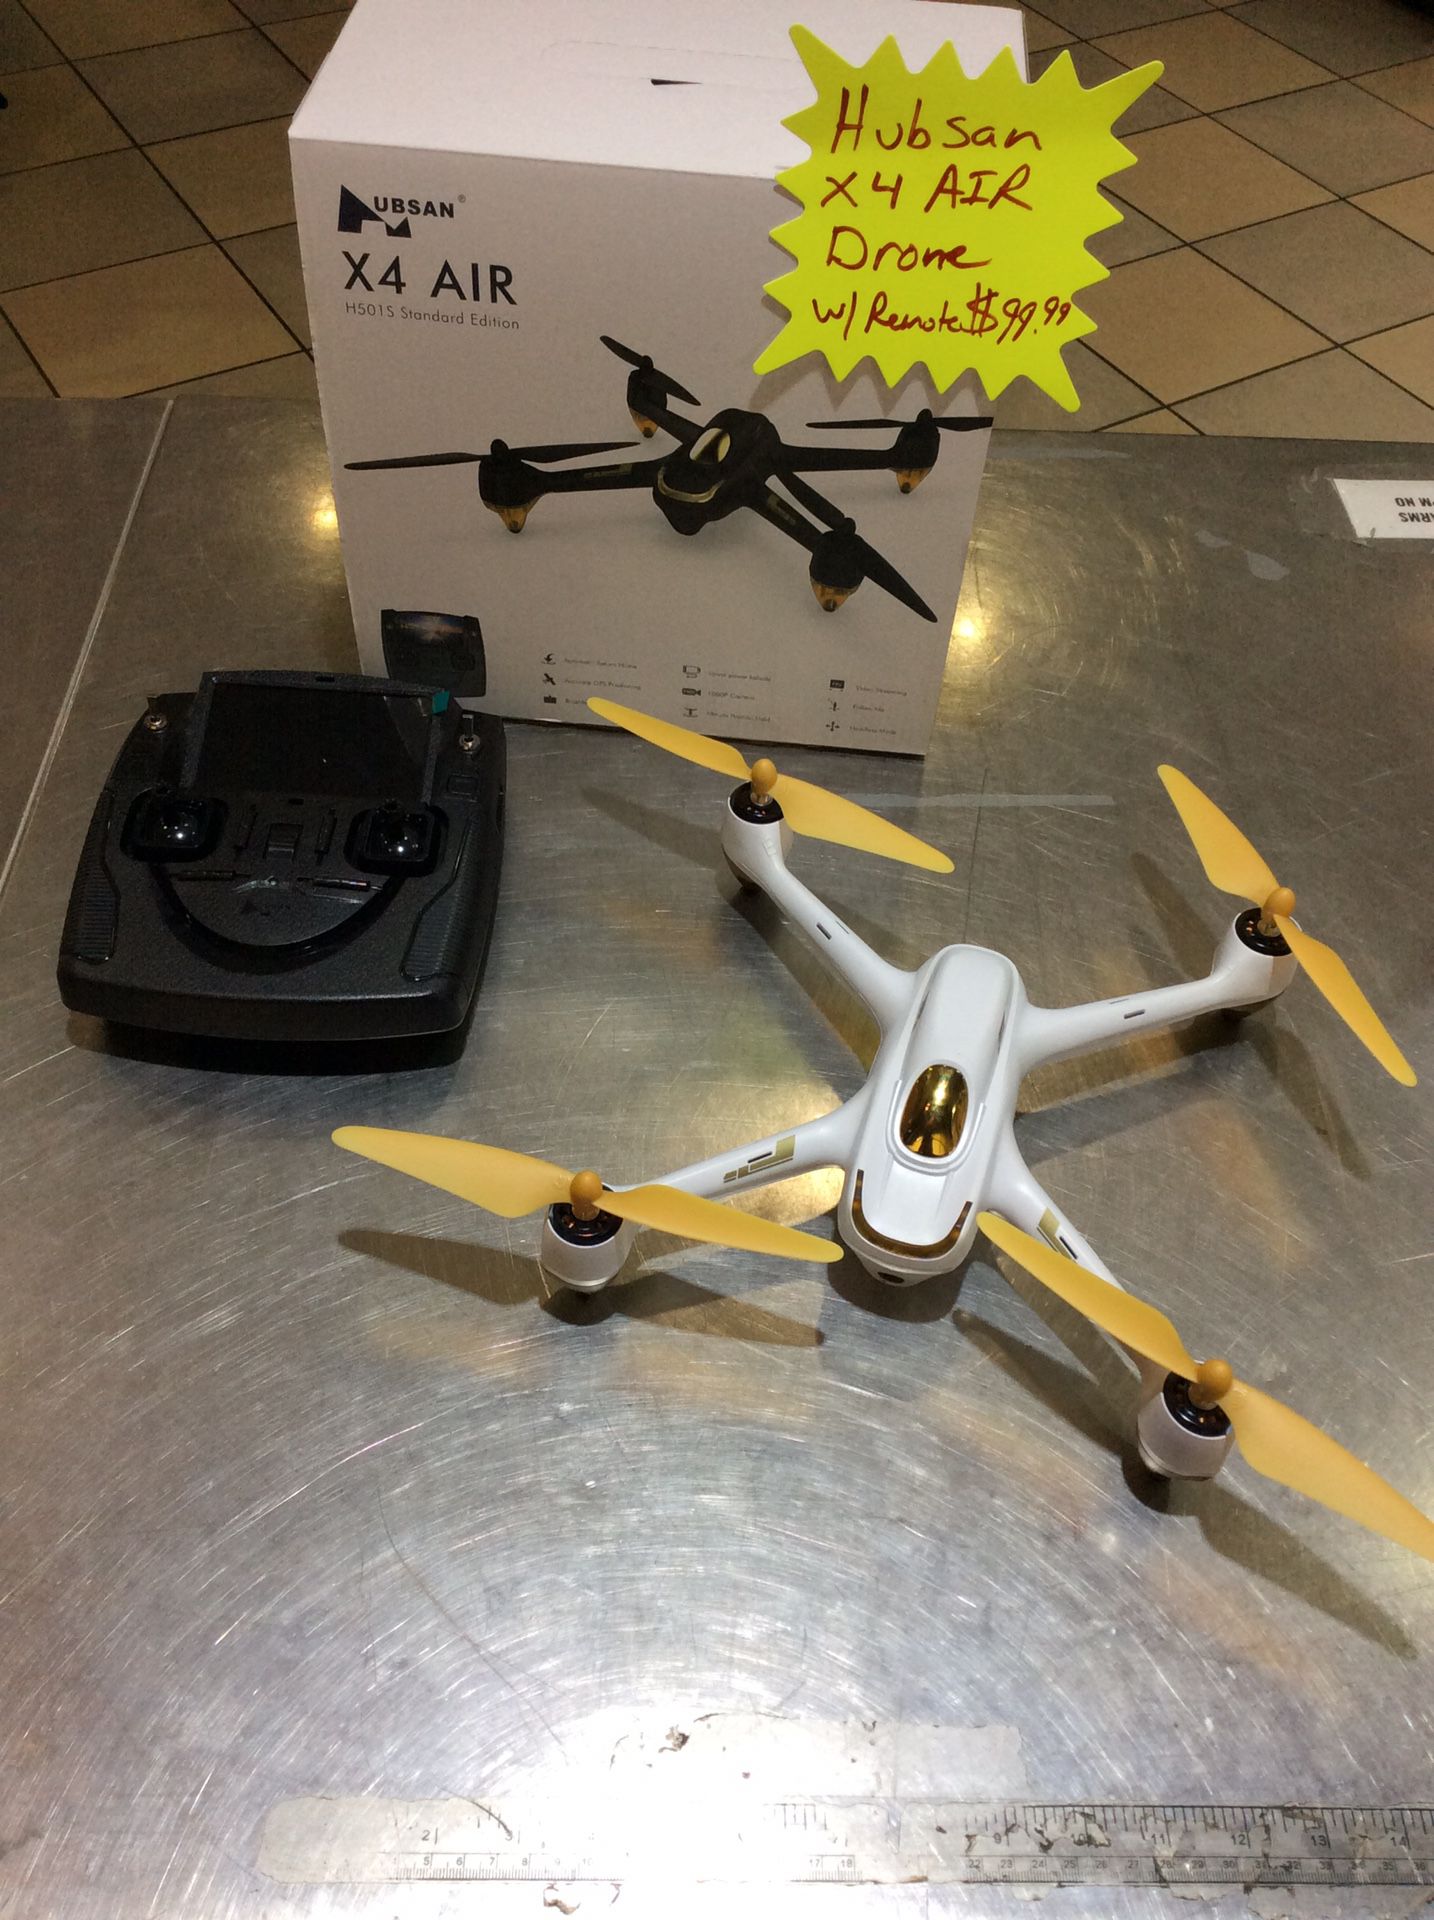 Hubsan x4 drone